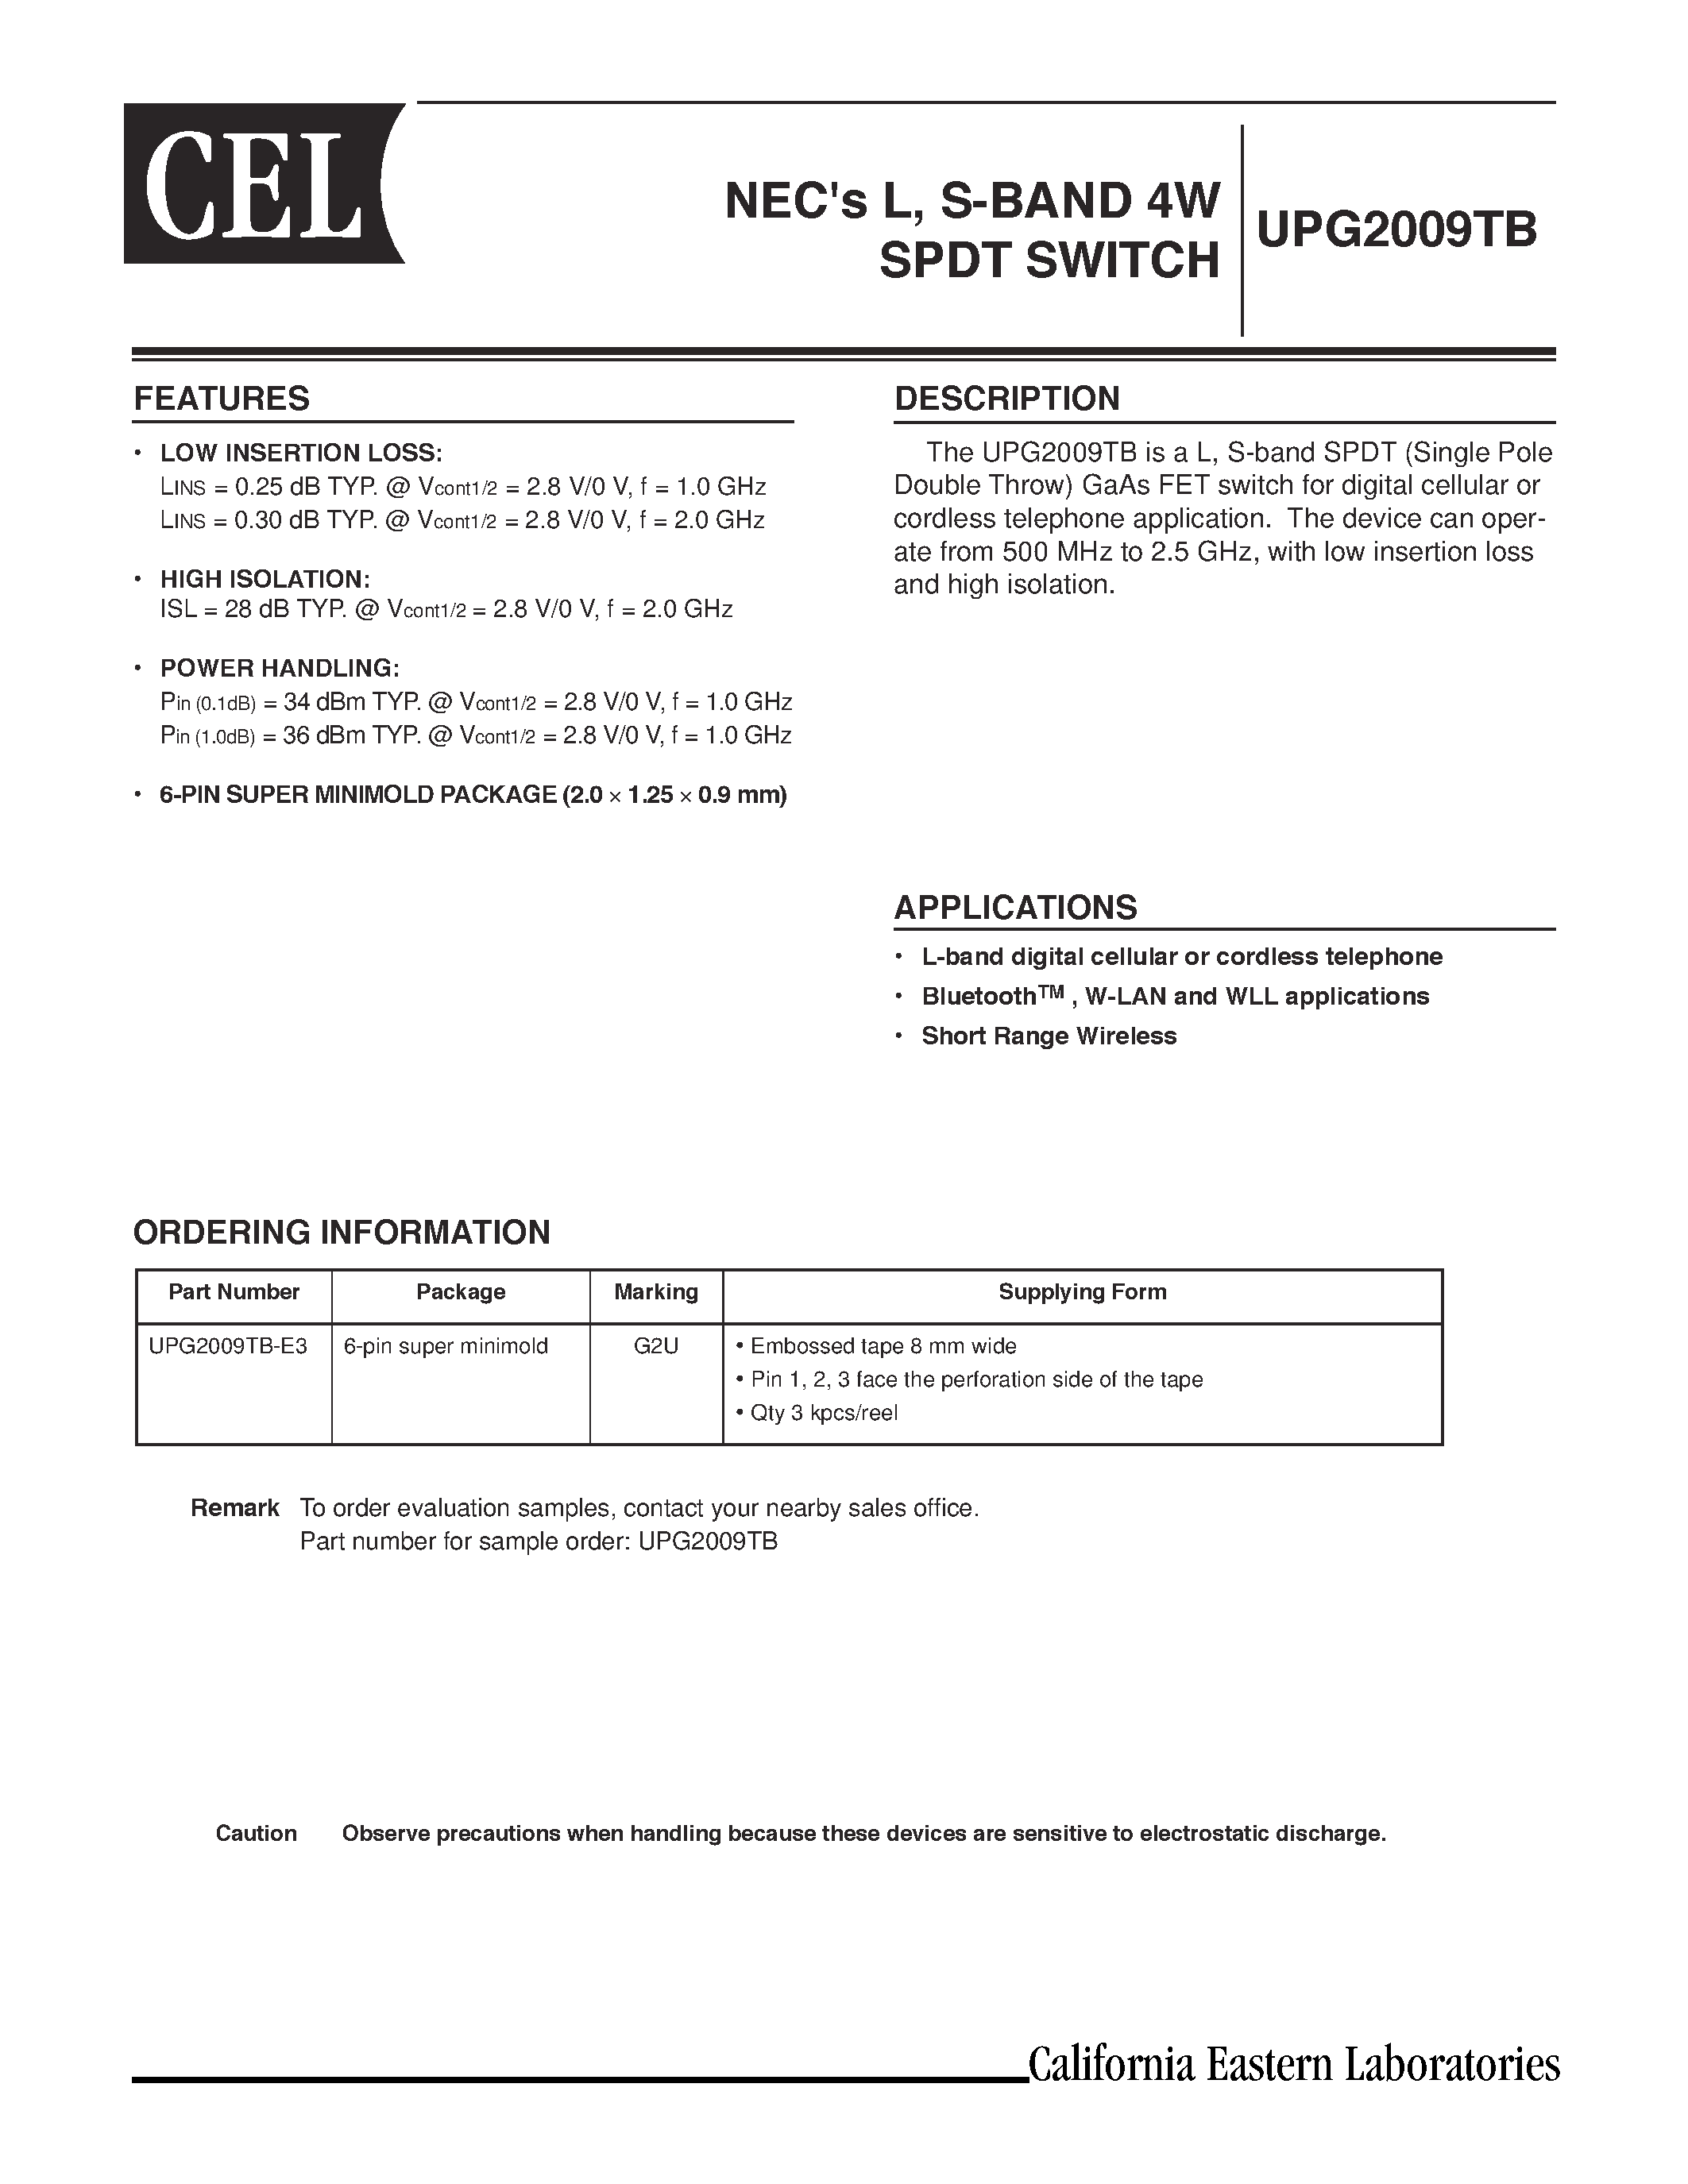 Datasheet UPG2009TB - NECs L/ S-BAND 4W SPDT SWITCH page 1